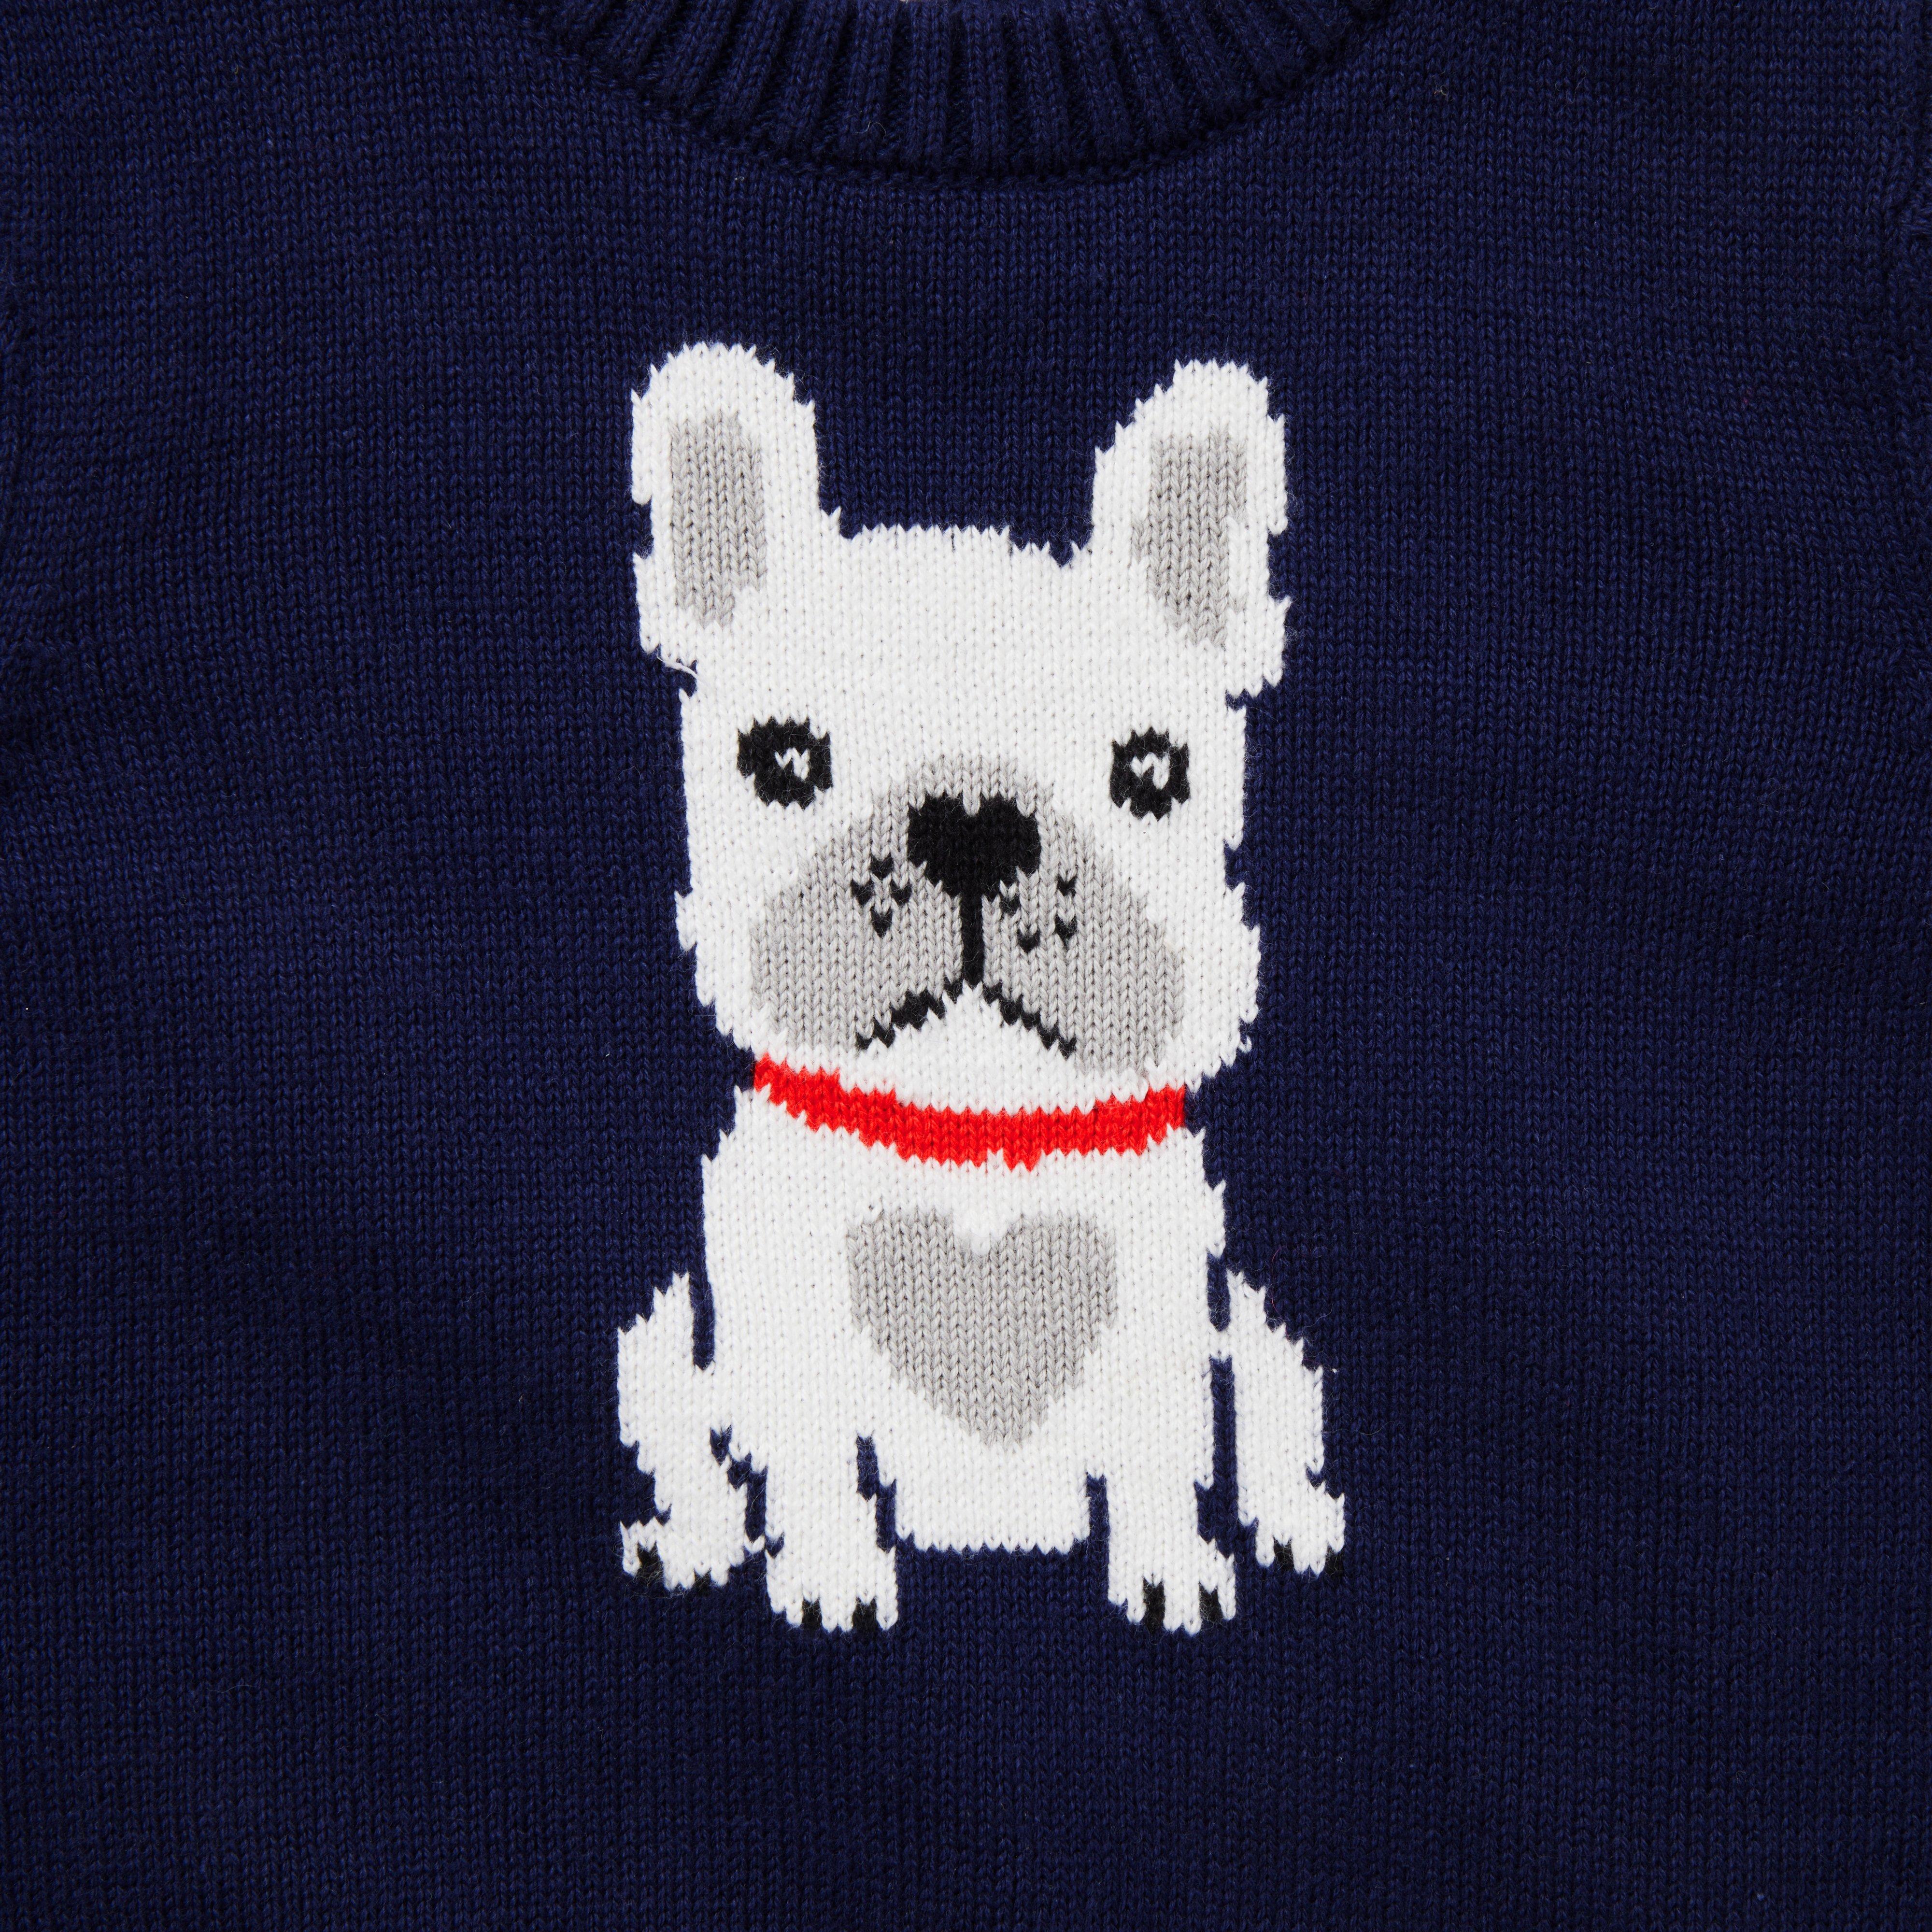 Baby French Bulldog Sweater